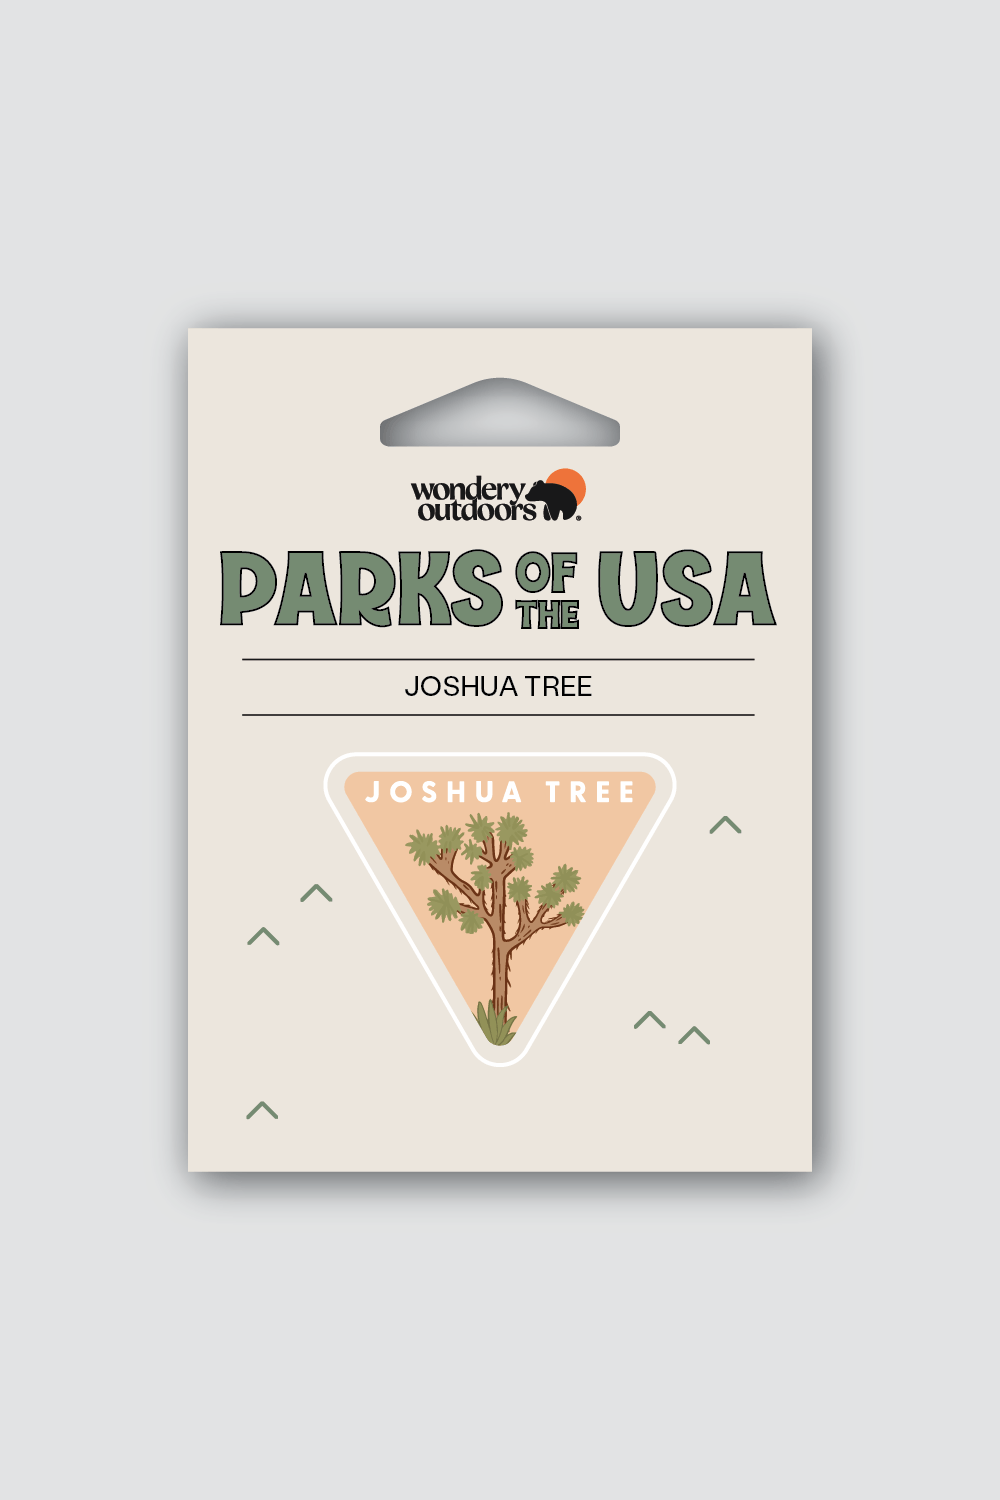 #national park_joshua tree _USA National Parks souvenir sticker gift sets